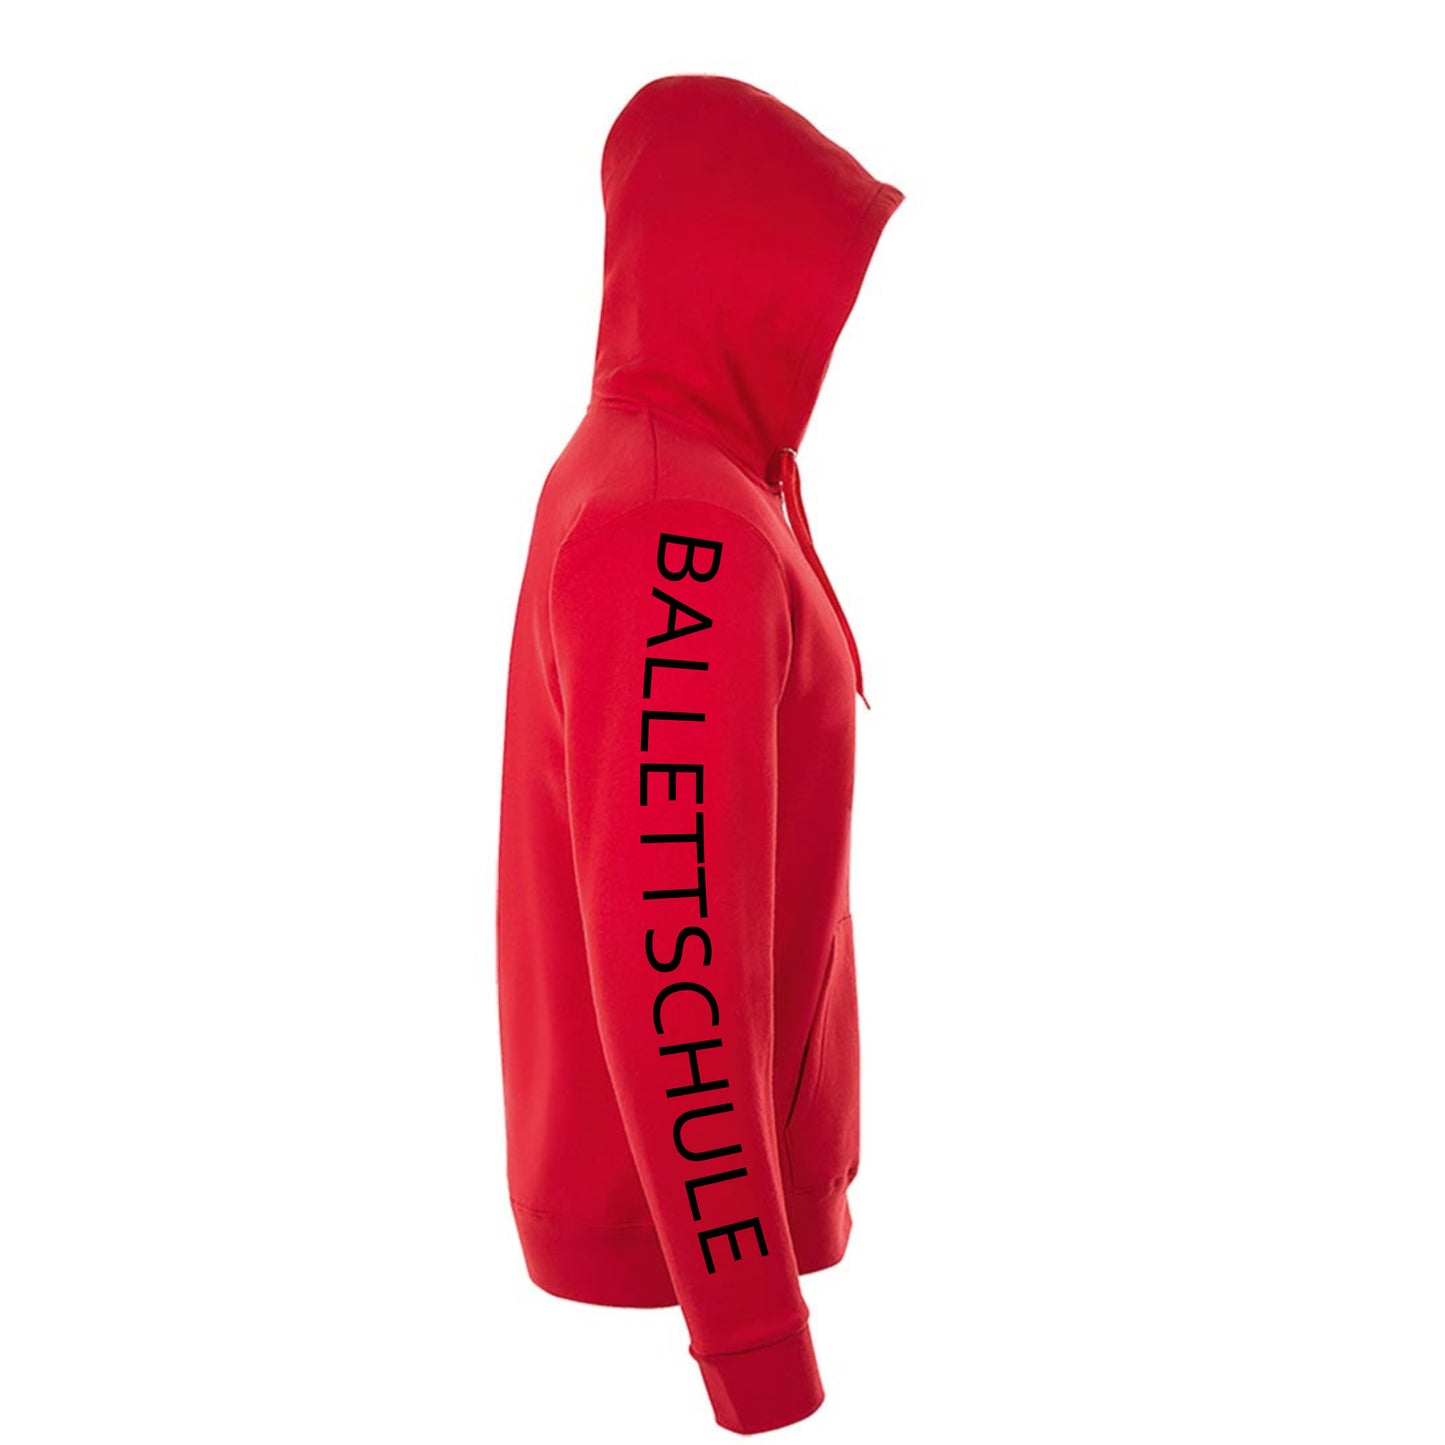 Sweatshirt-Jacke  "Ballettschule" rot mit schwarzem Druck